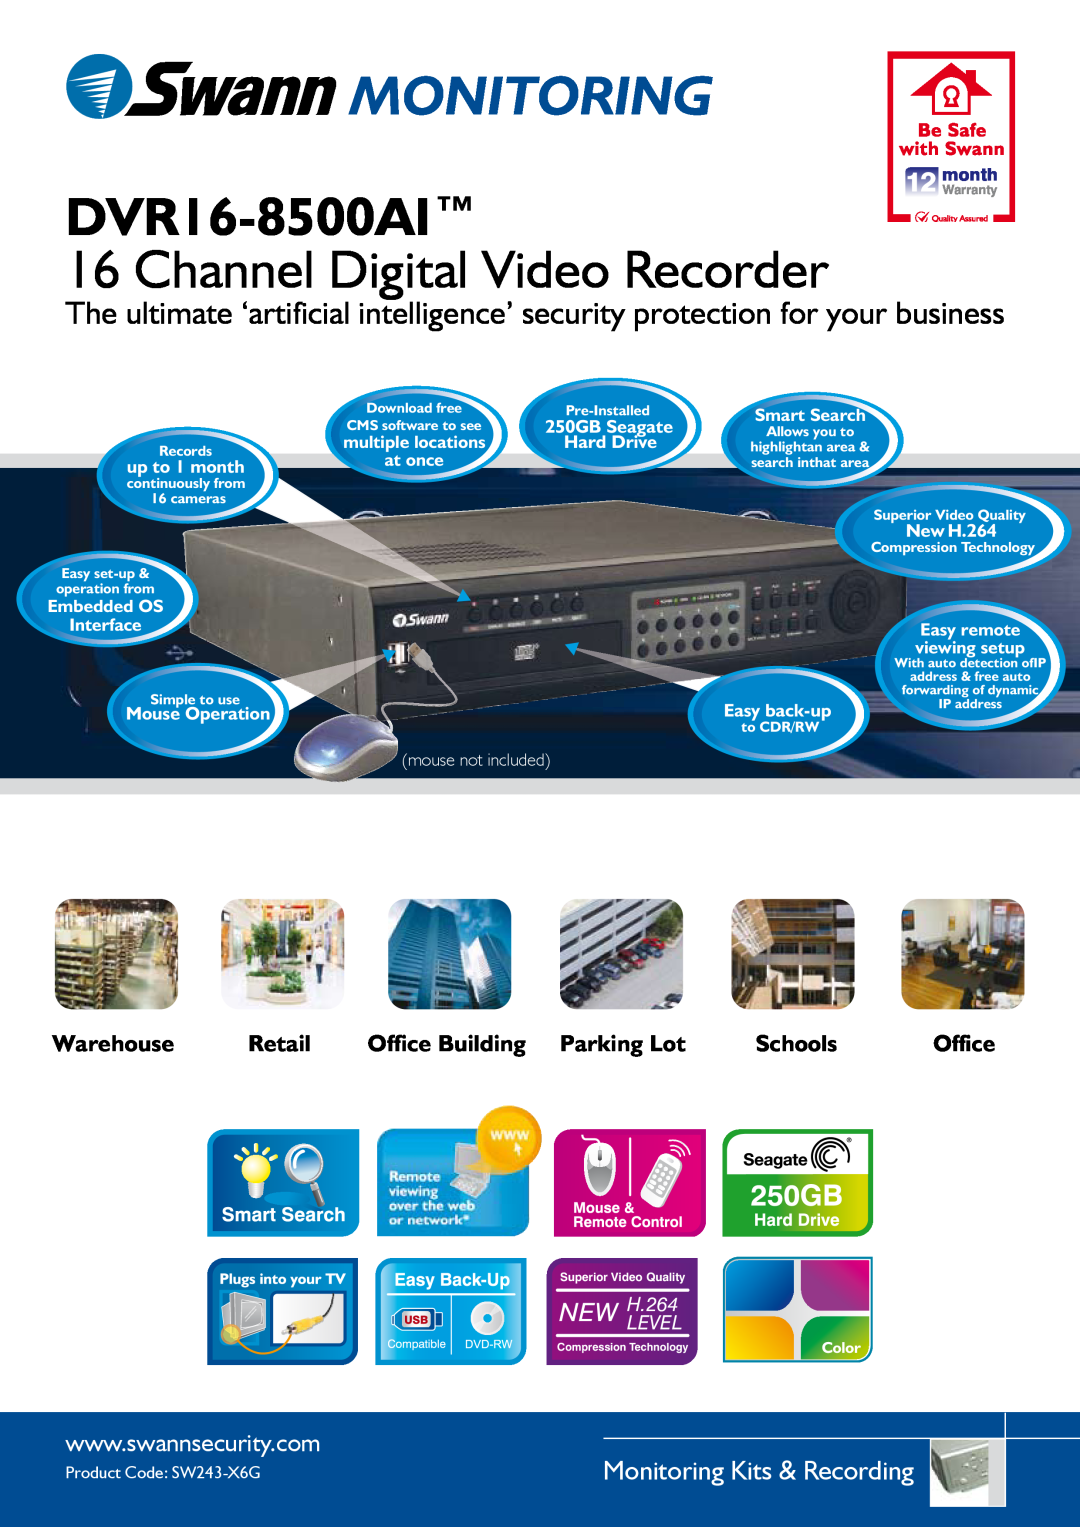 Swann SW243-X6G warranty Monitoring Kits & Recording, DVR16-8500AI, Channel Digital Video Recorder, Warehouse, Retail 